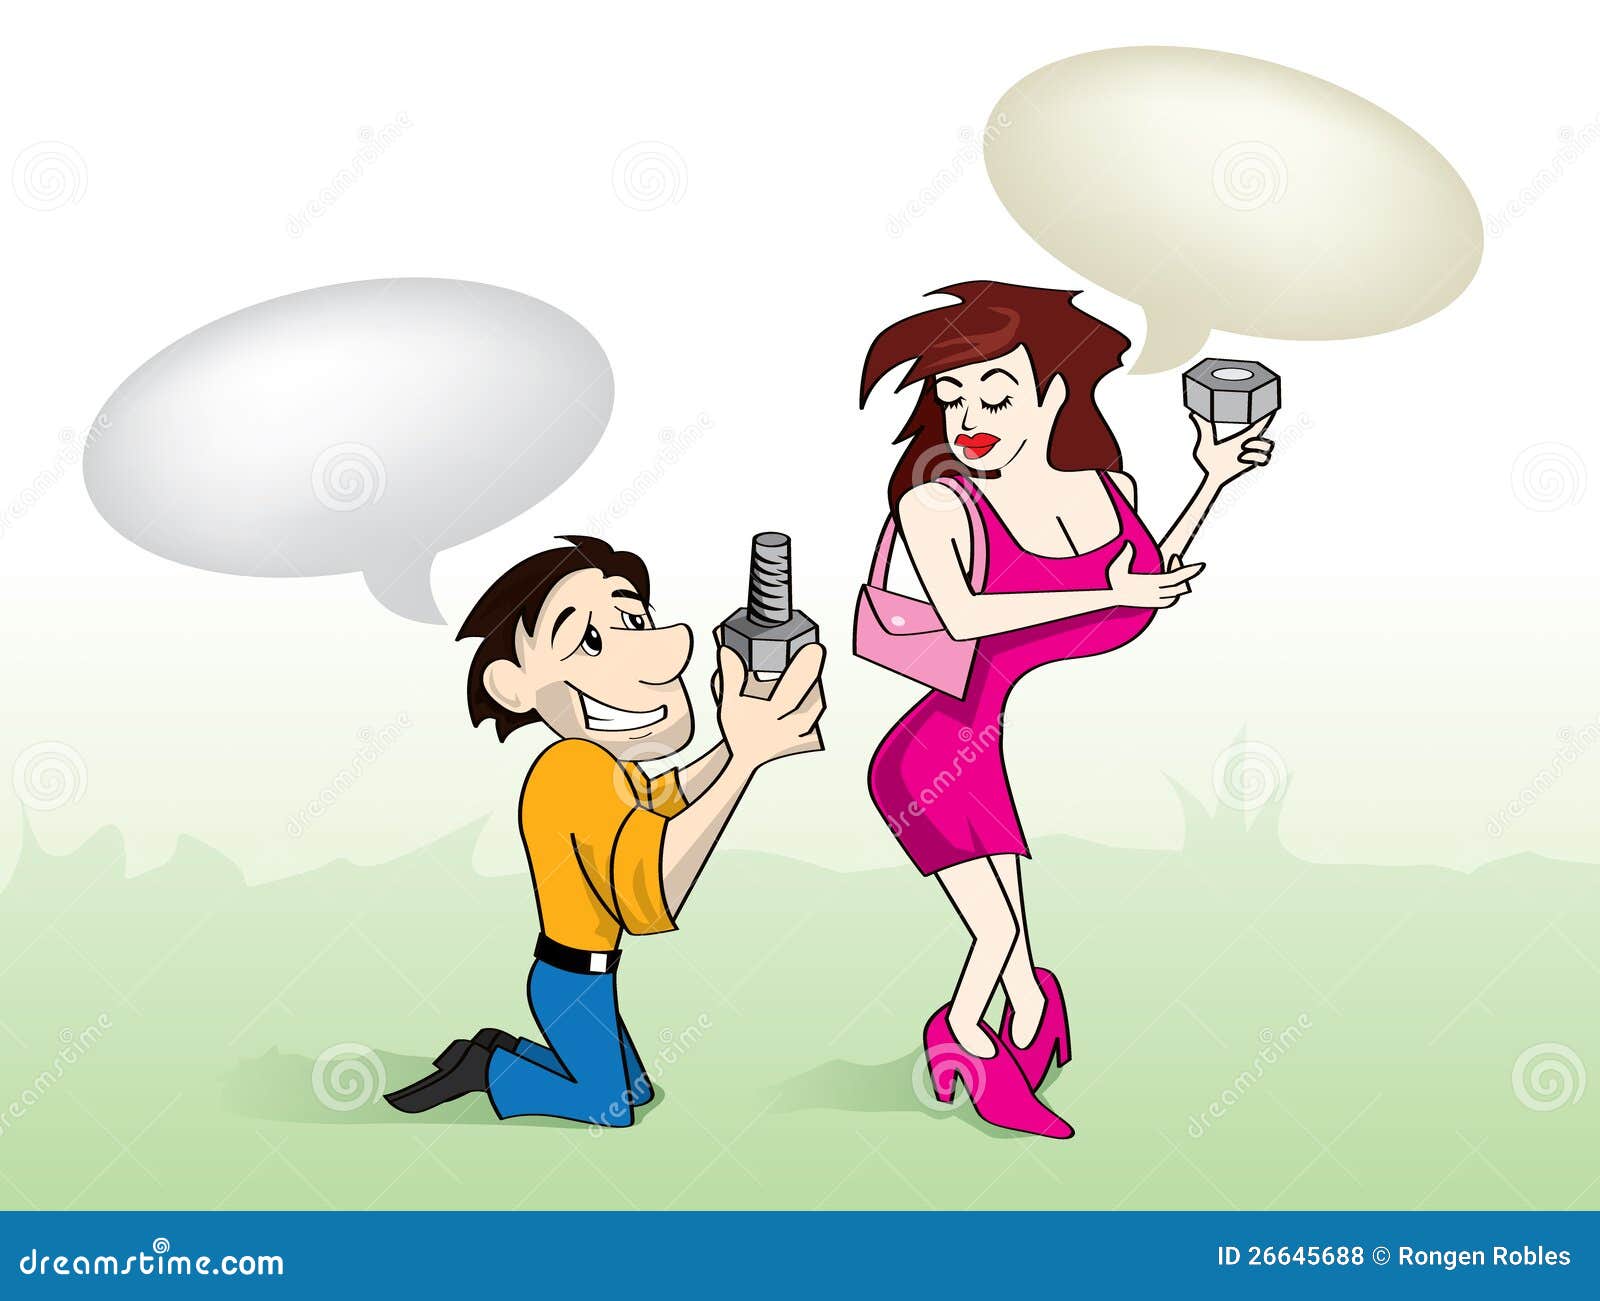 Sweet Couple Cartoons stock illustration. Illustration of dating - 26645688